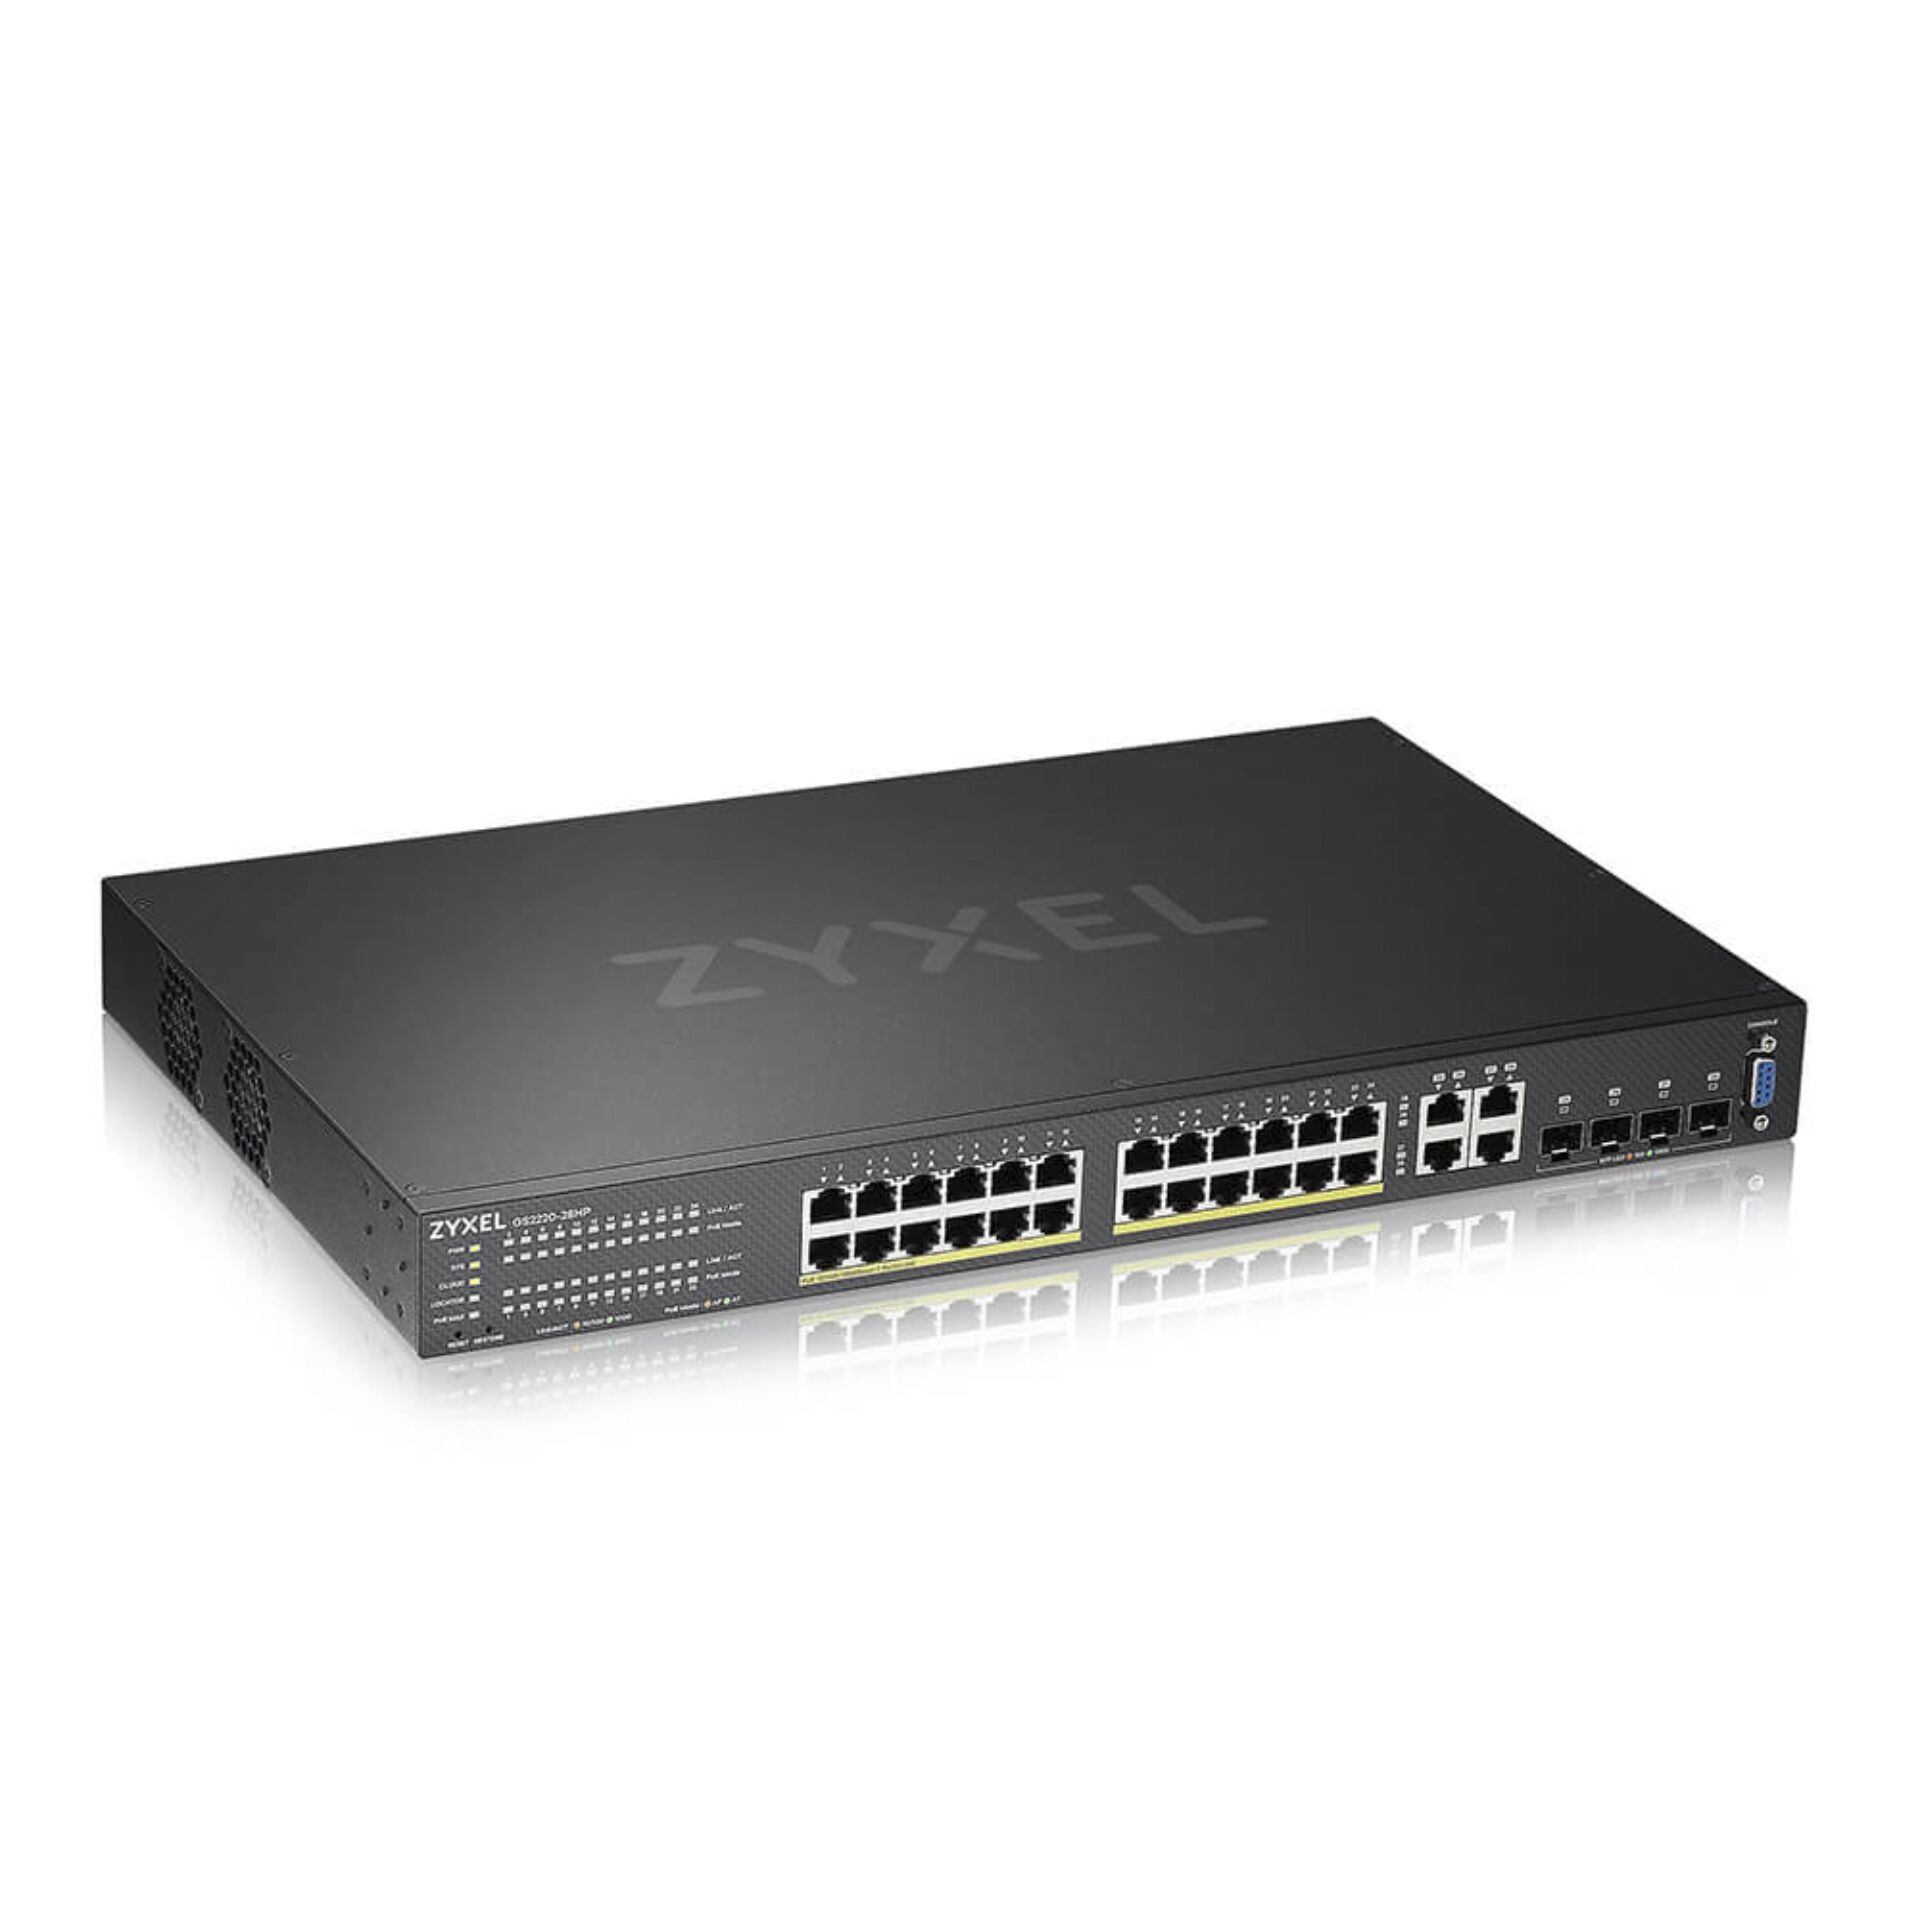 Zyxel GS2220-28HP 24-Port + 4x SFP/Rj45 Gb POE+